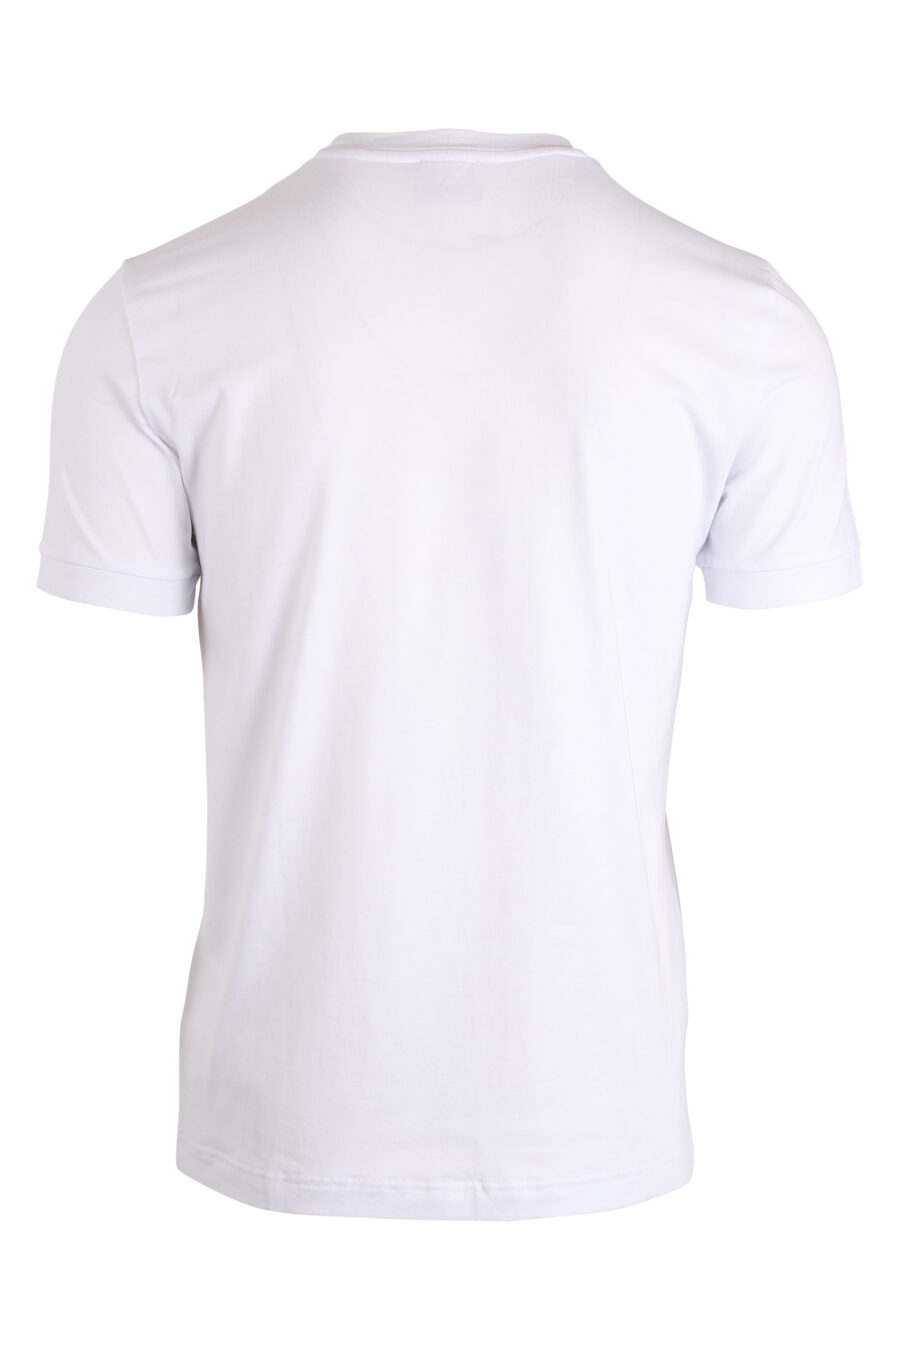 Camiseta blanca con logo "lux identity" en cuadricula - IMG 4216